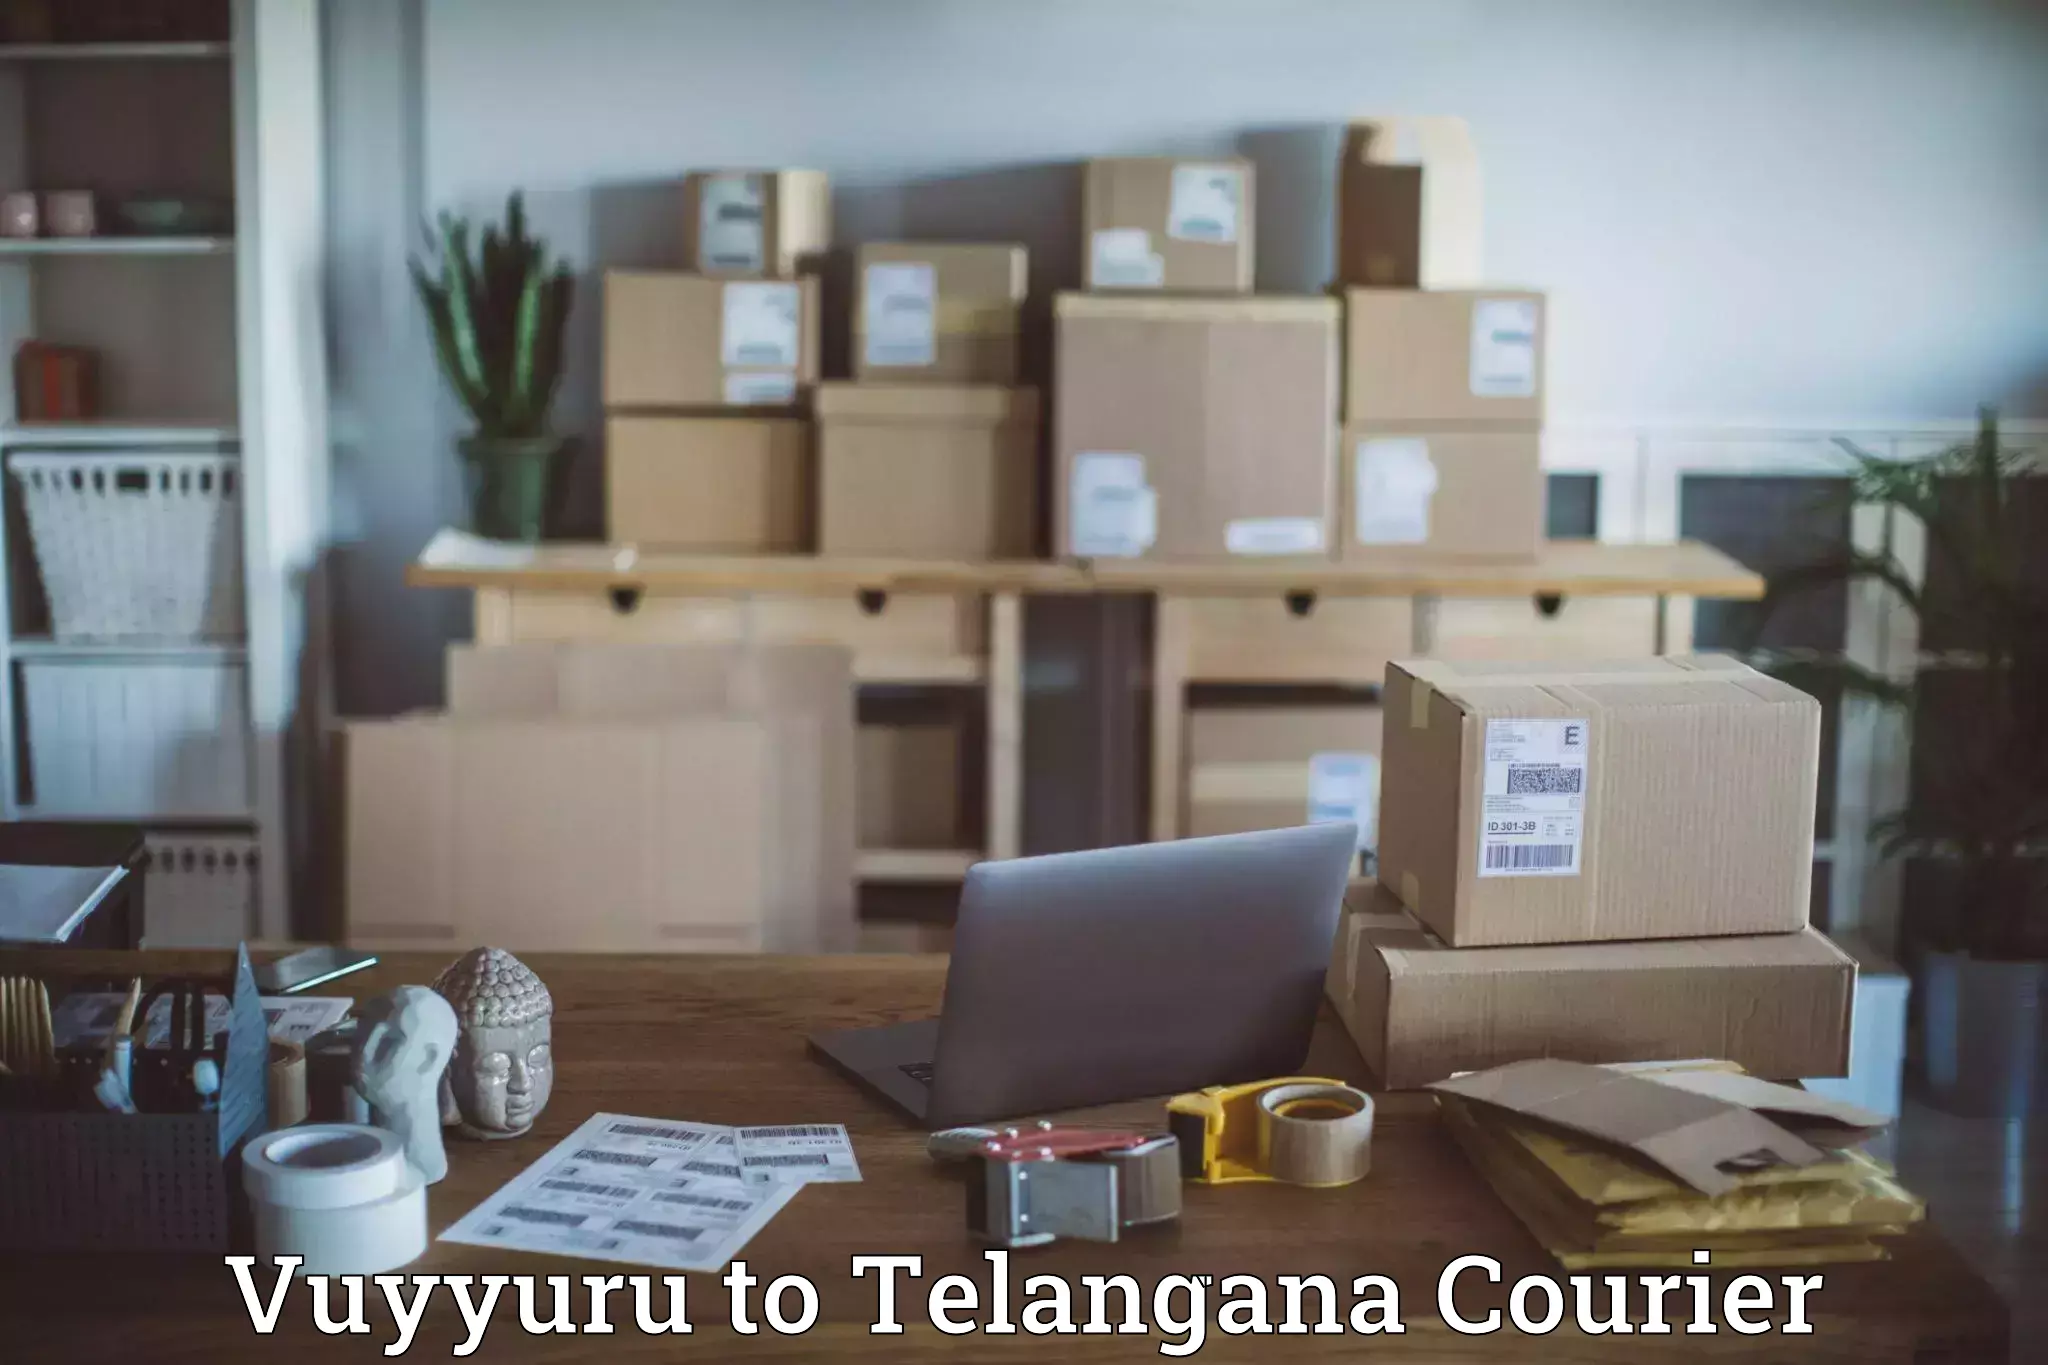 24-hour courier service Vuyyuru to Karimnagar